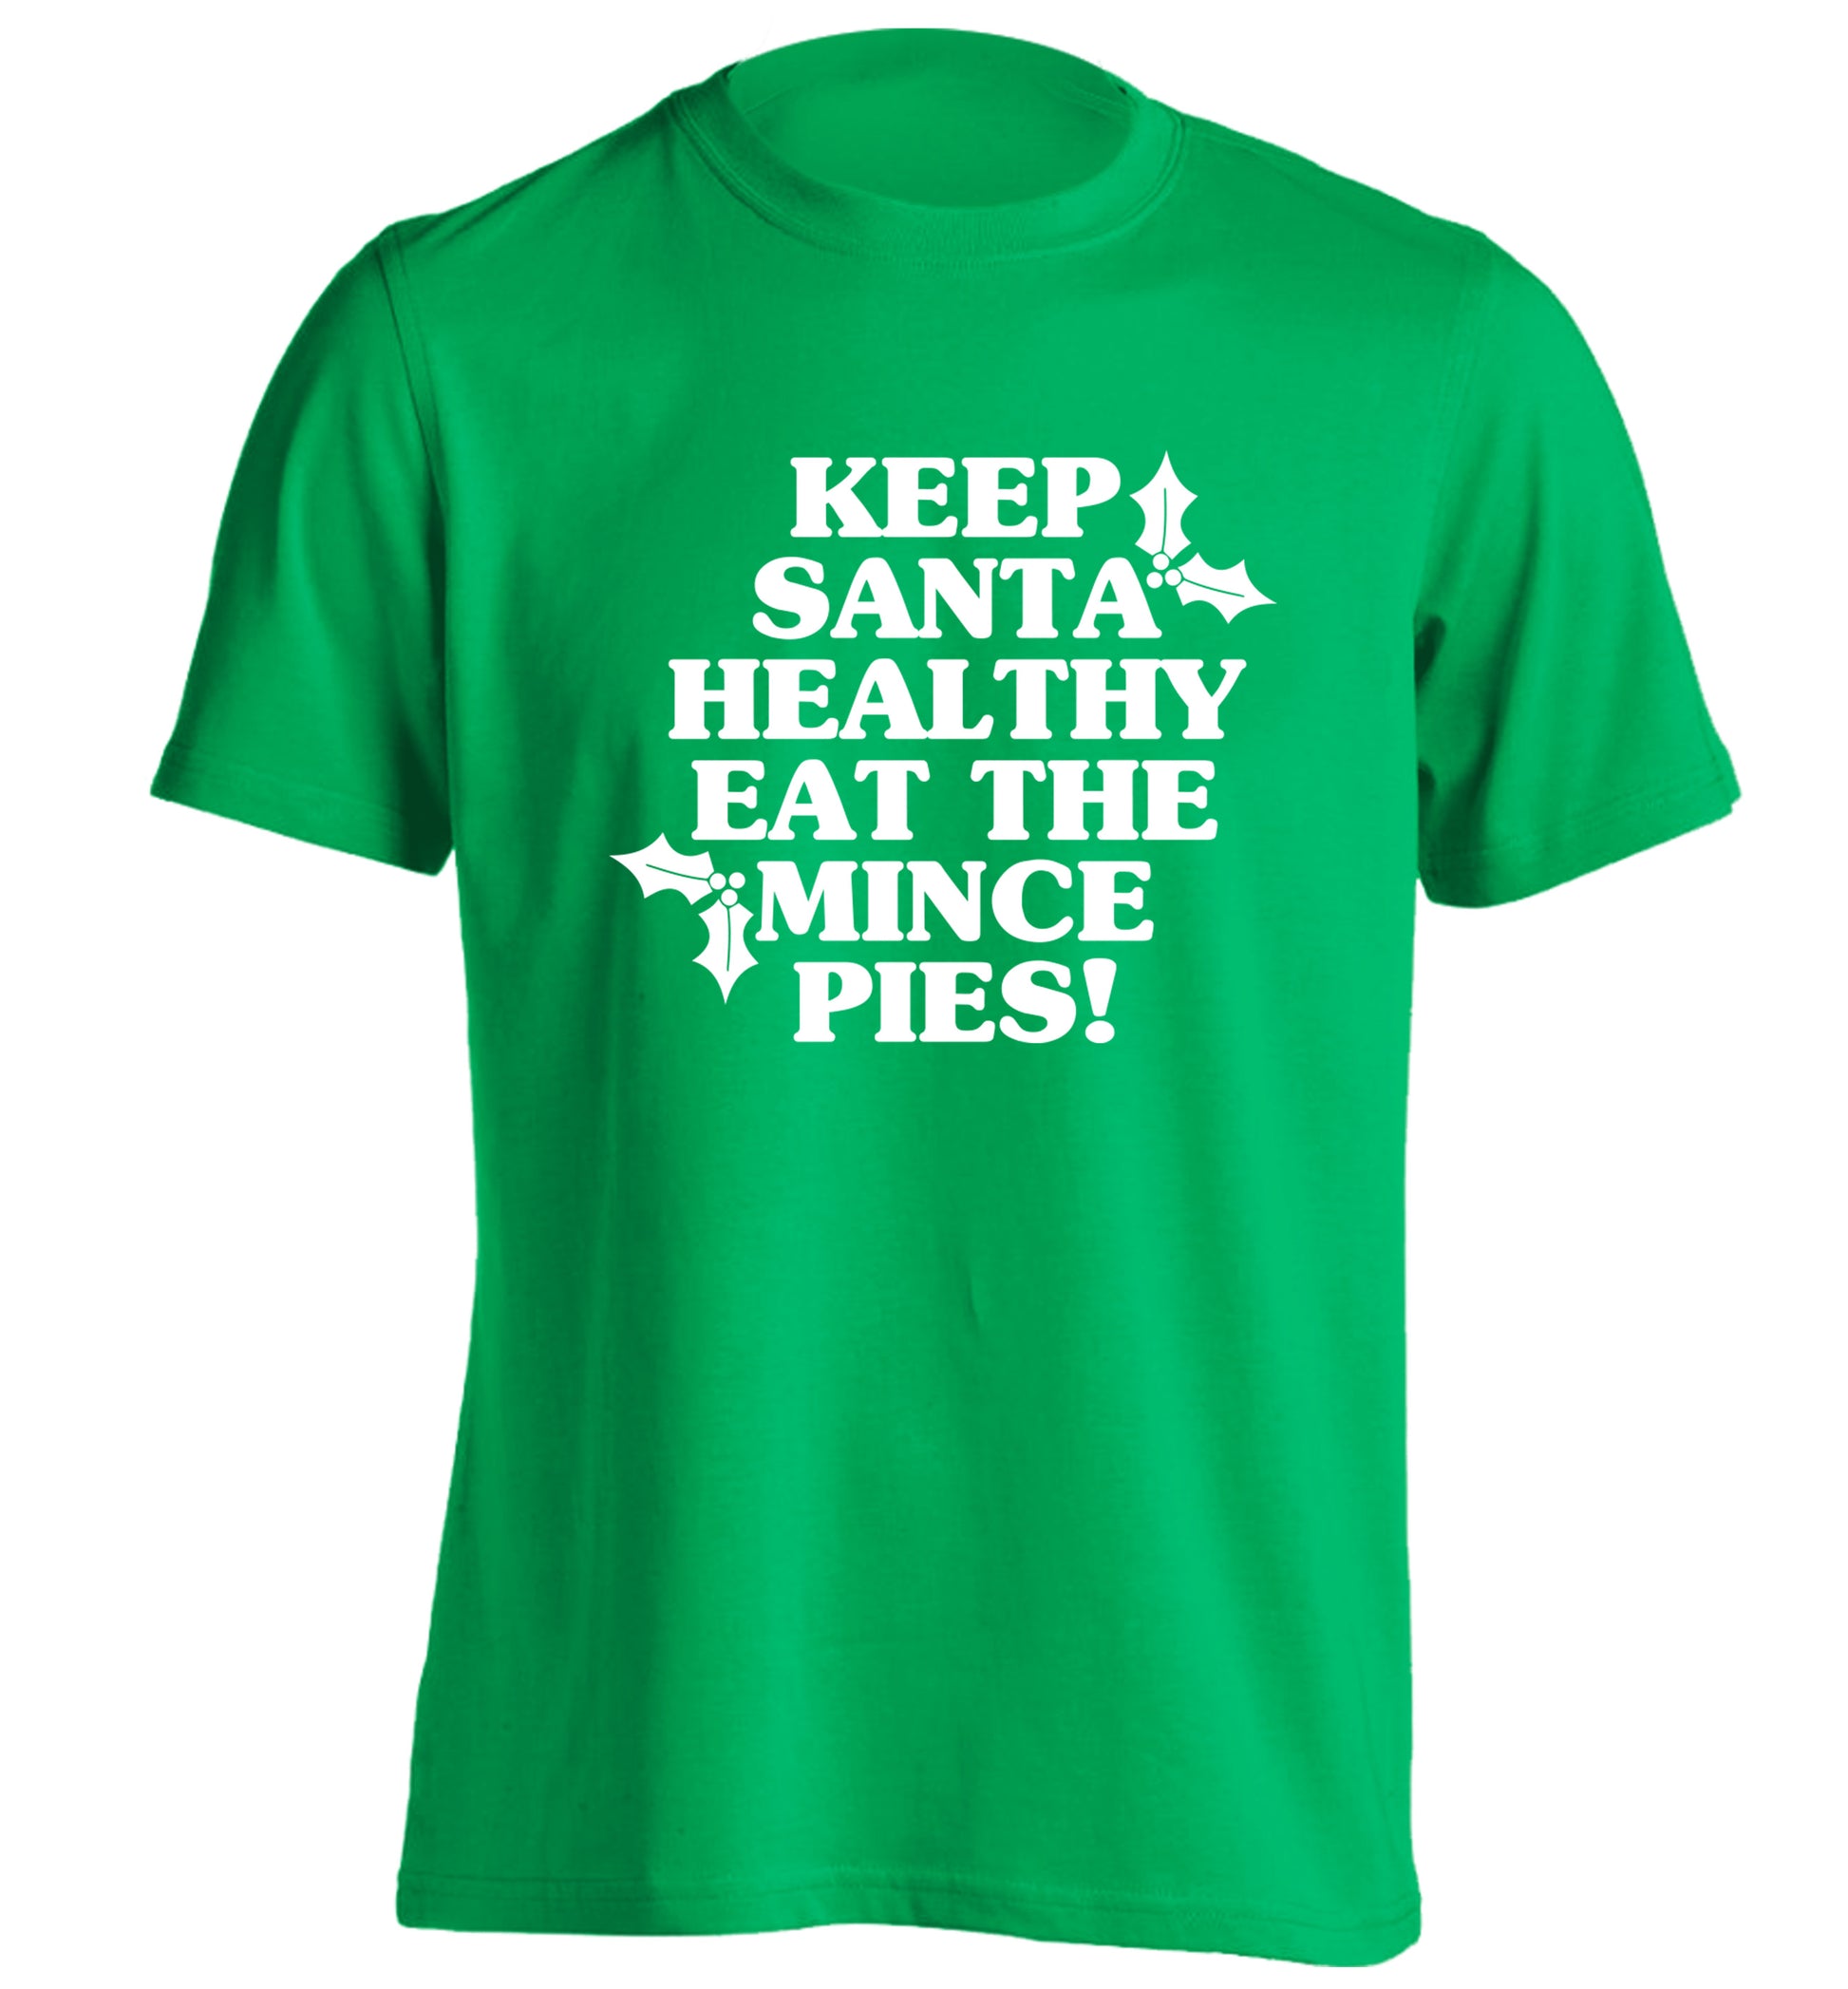 Keep santa healthy eat the mince pies adults unisex green Tshirt 2XL